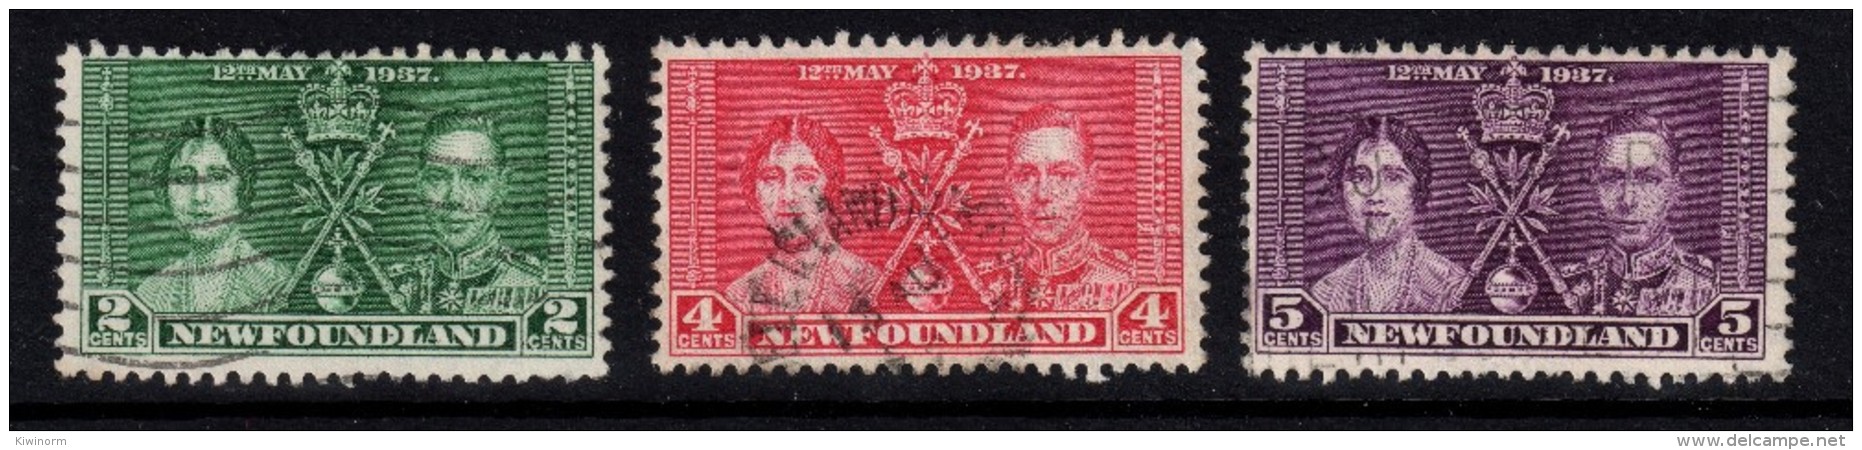 NEWFOUNDLAND CANADA 1937 Coronation Omnibus Set - Very Fine Used - VFU - 5B835 - 1857-1861